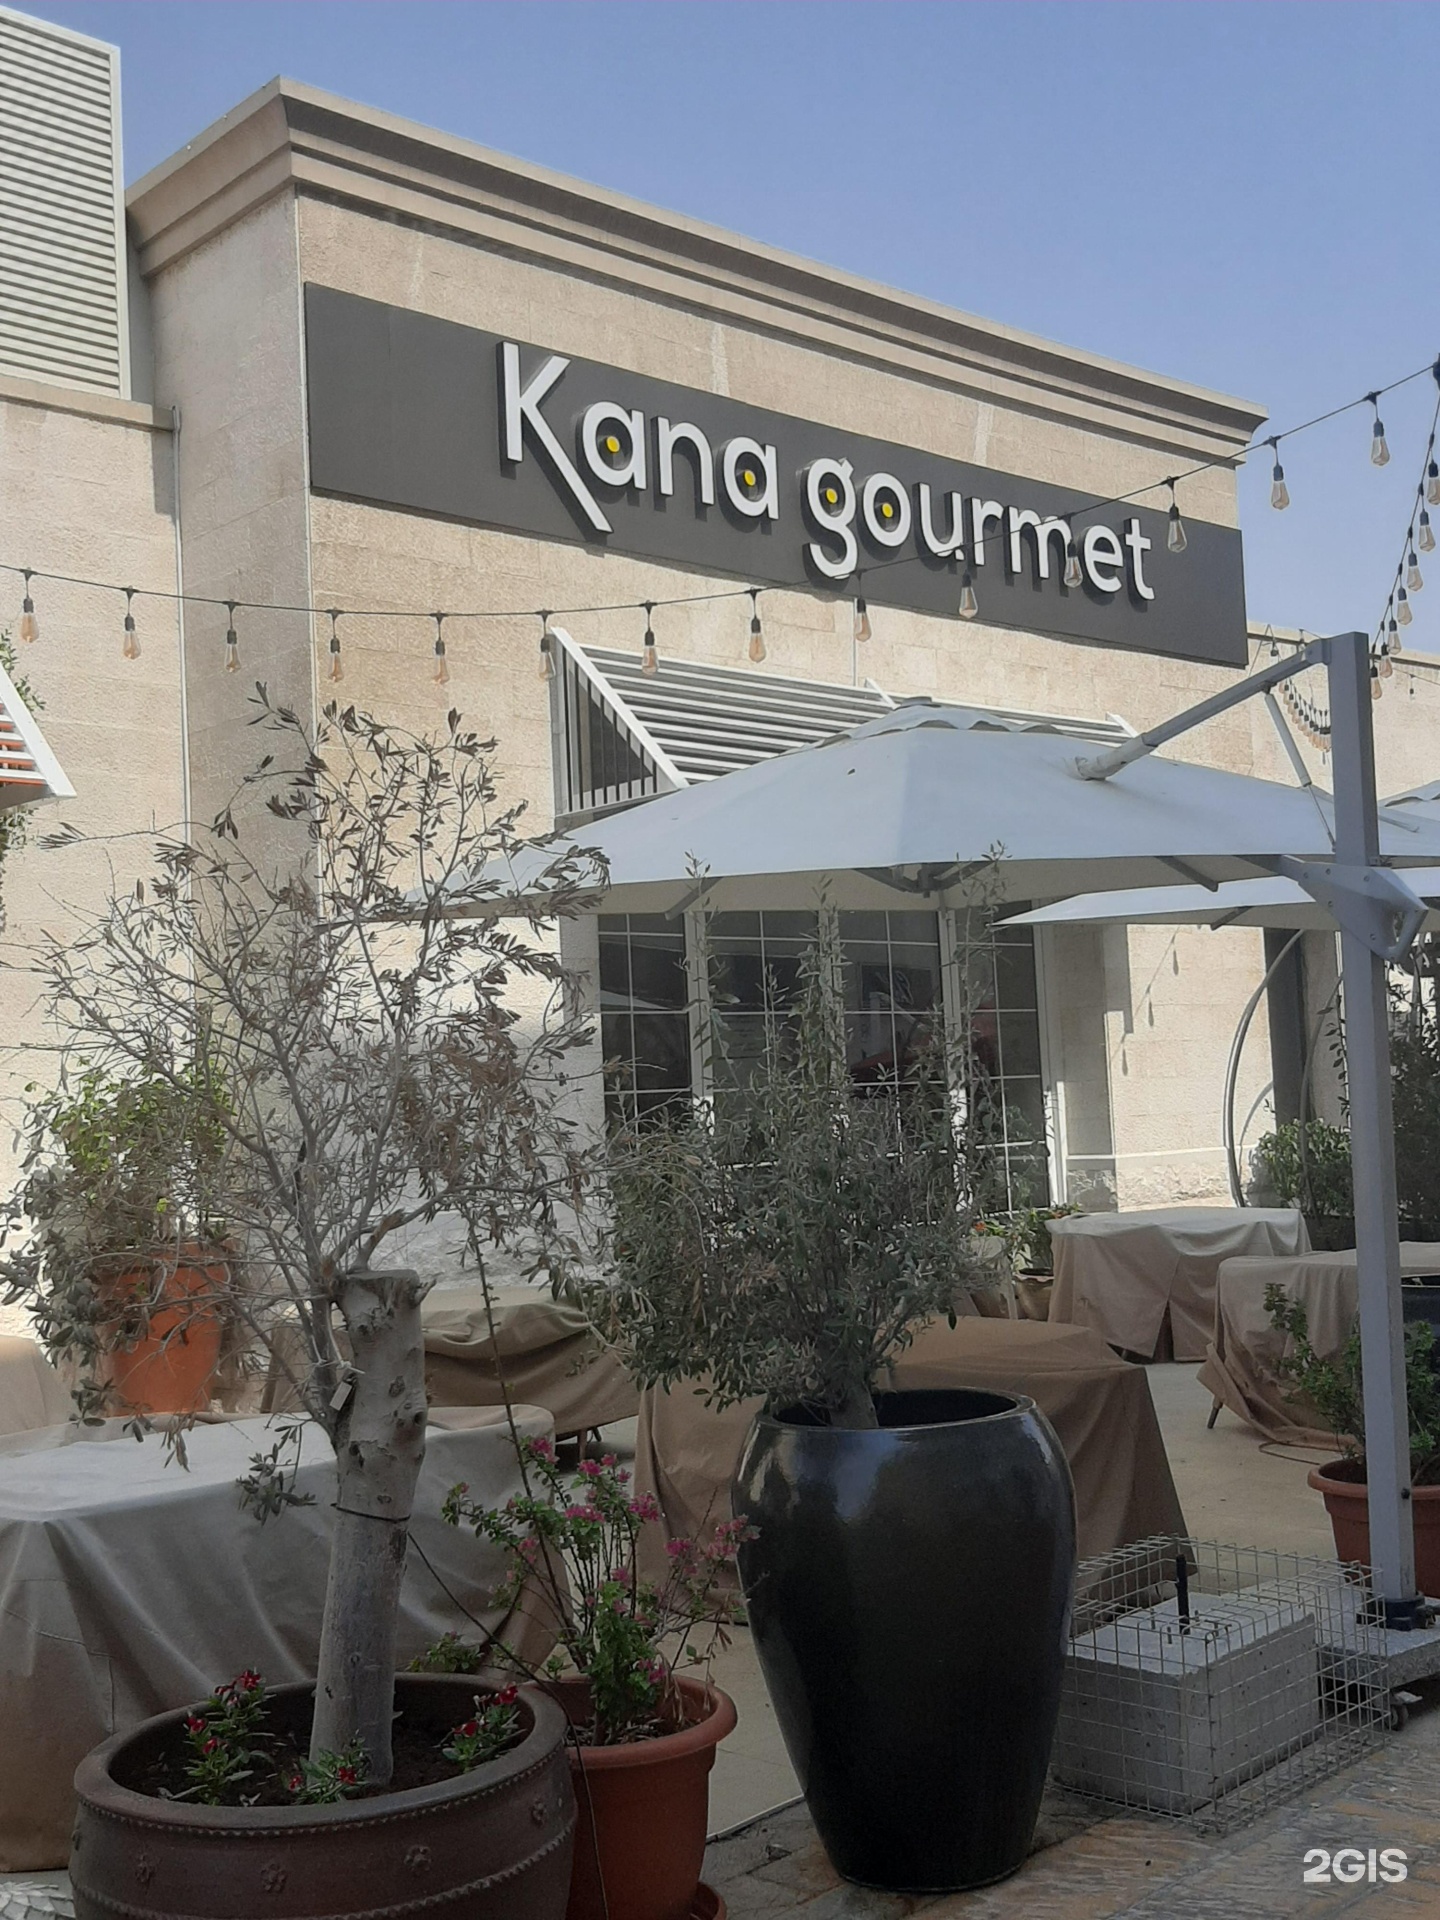 47 Dubai street, Gourmet, — Kana 2GIS restaurant, 2a,